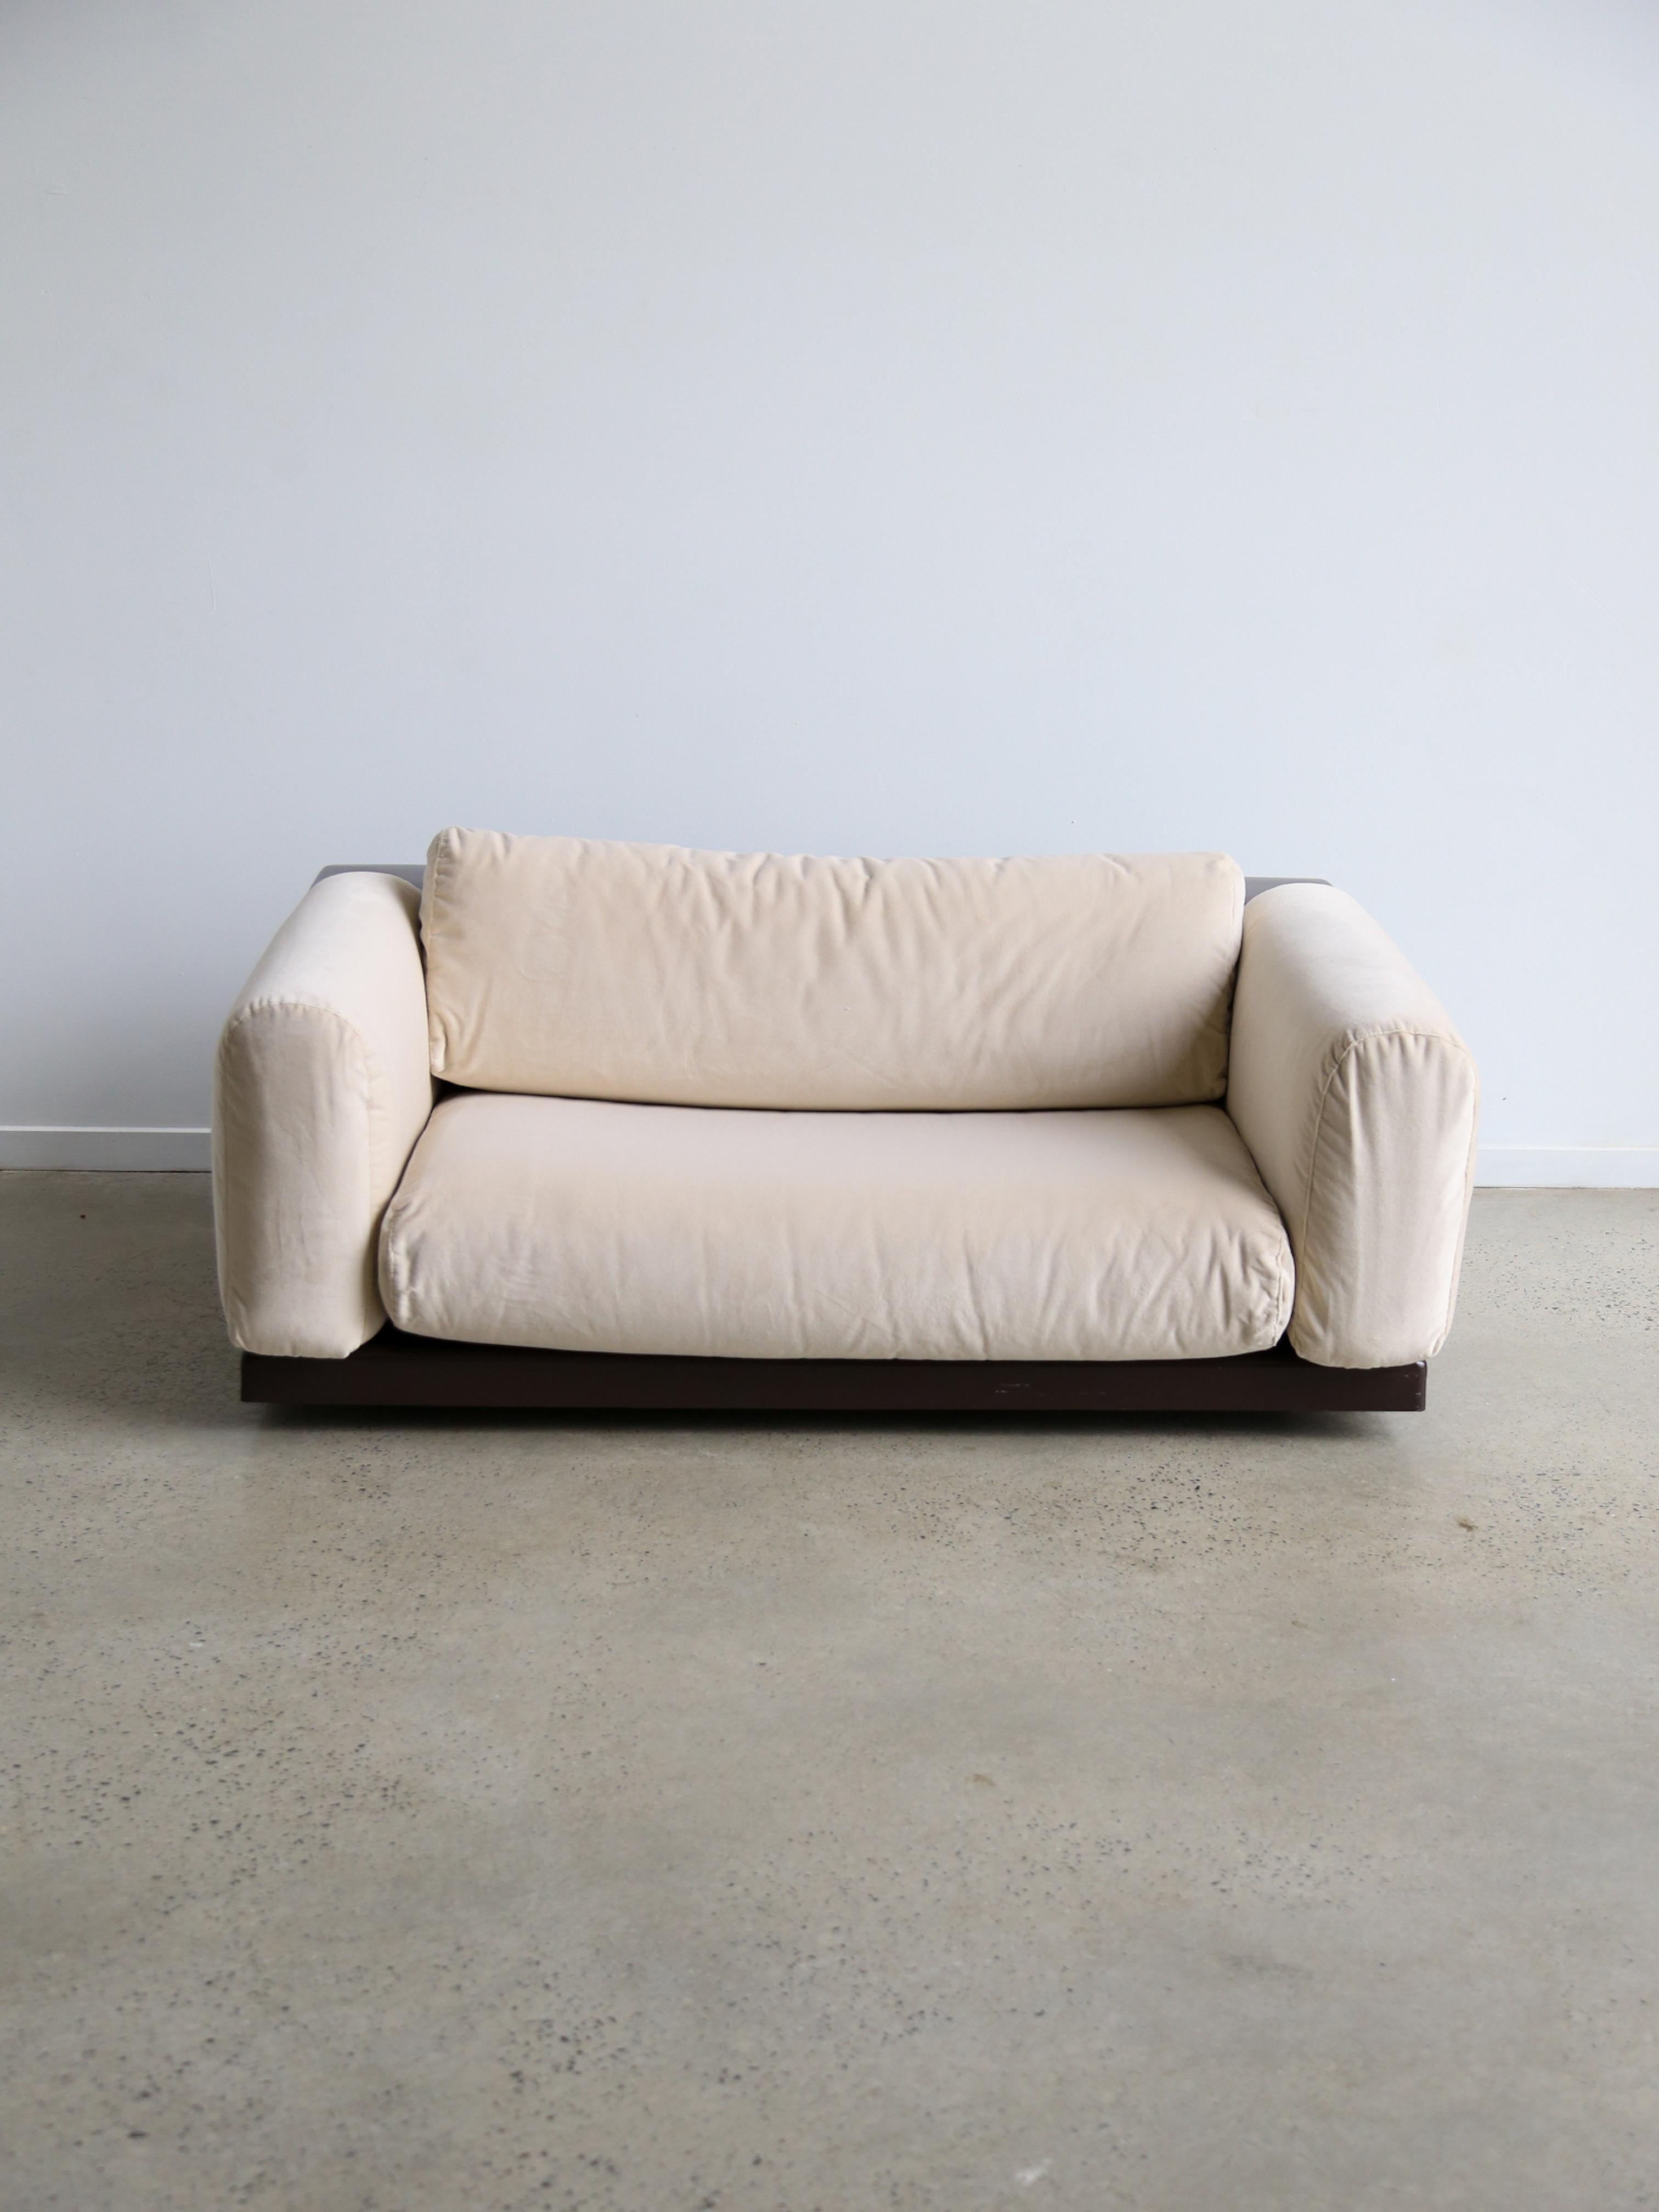 Italian Mid Century Modern Gradual Sofa with Brown Base by Cini Boeri for Knoll For Sale